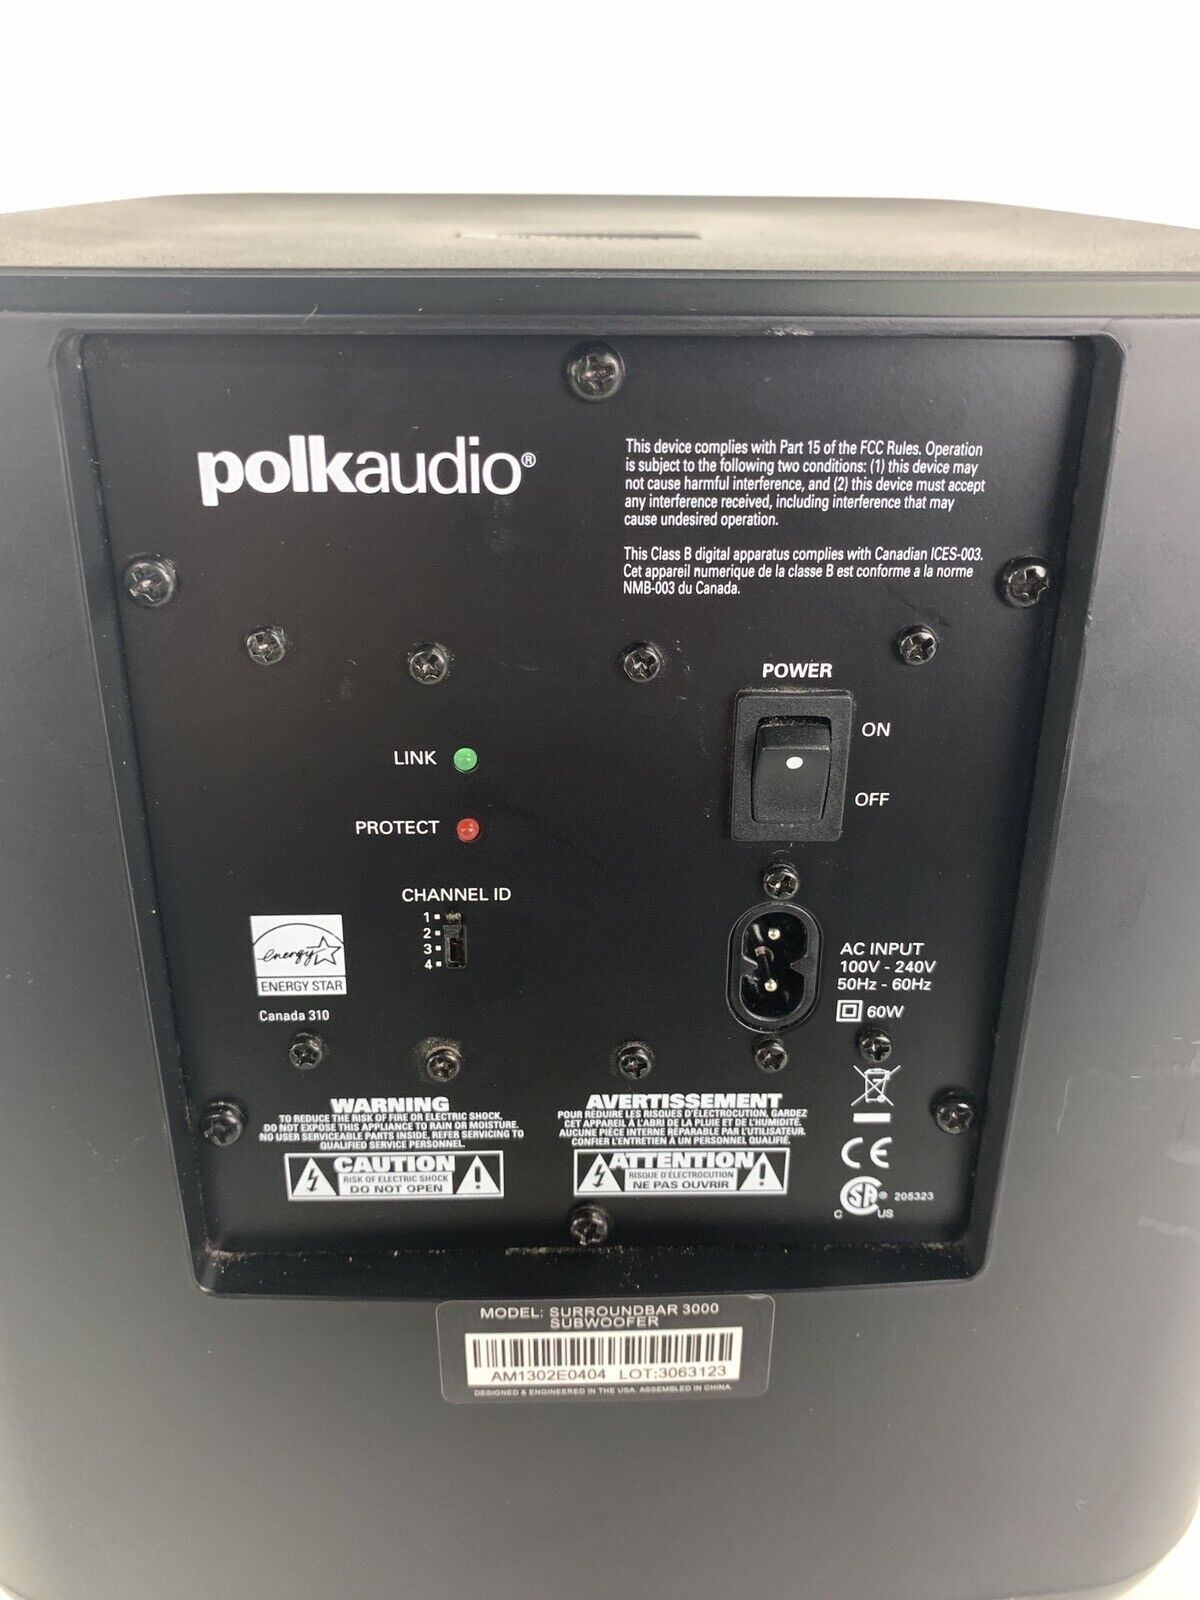 Polk Audio SurroundBar 3000 and Subwoofer Power Adapter